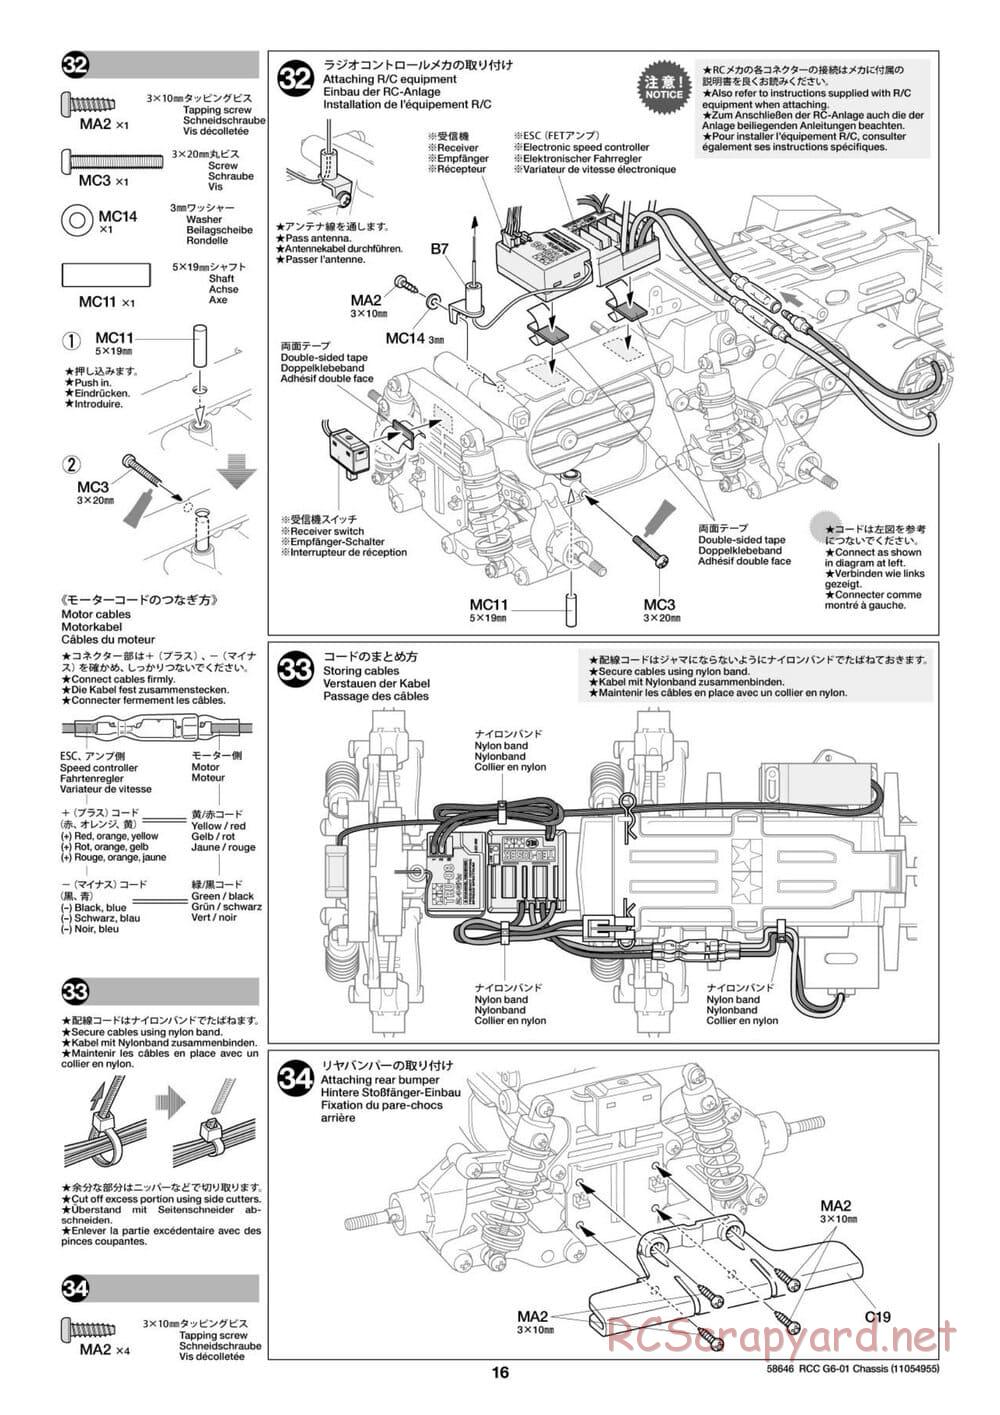 Tamiya - Konghead 6x6 - G6-01 Chassis - Manual - Page 16